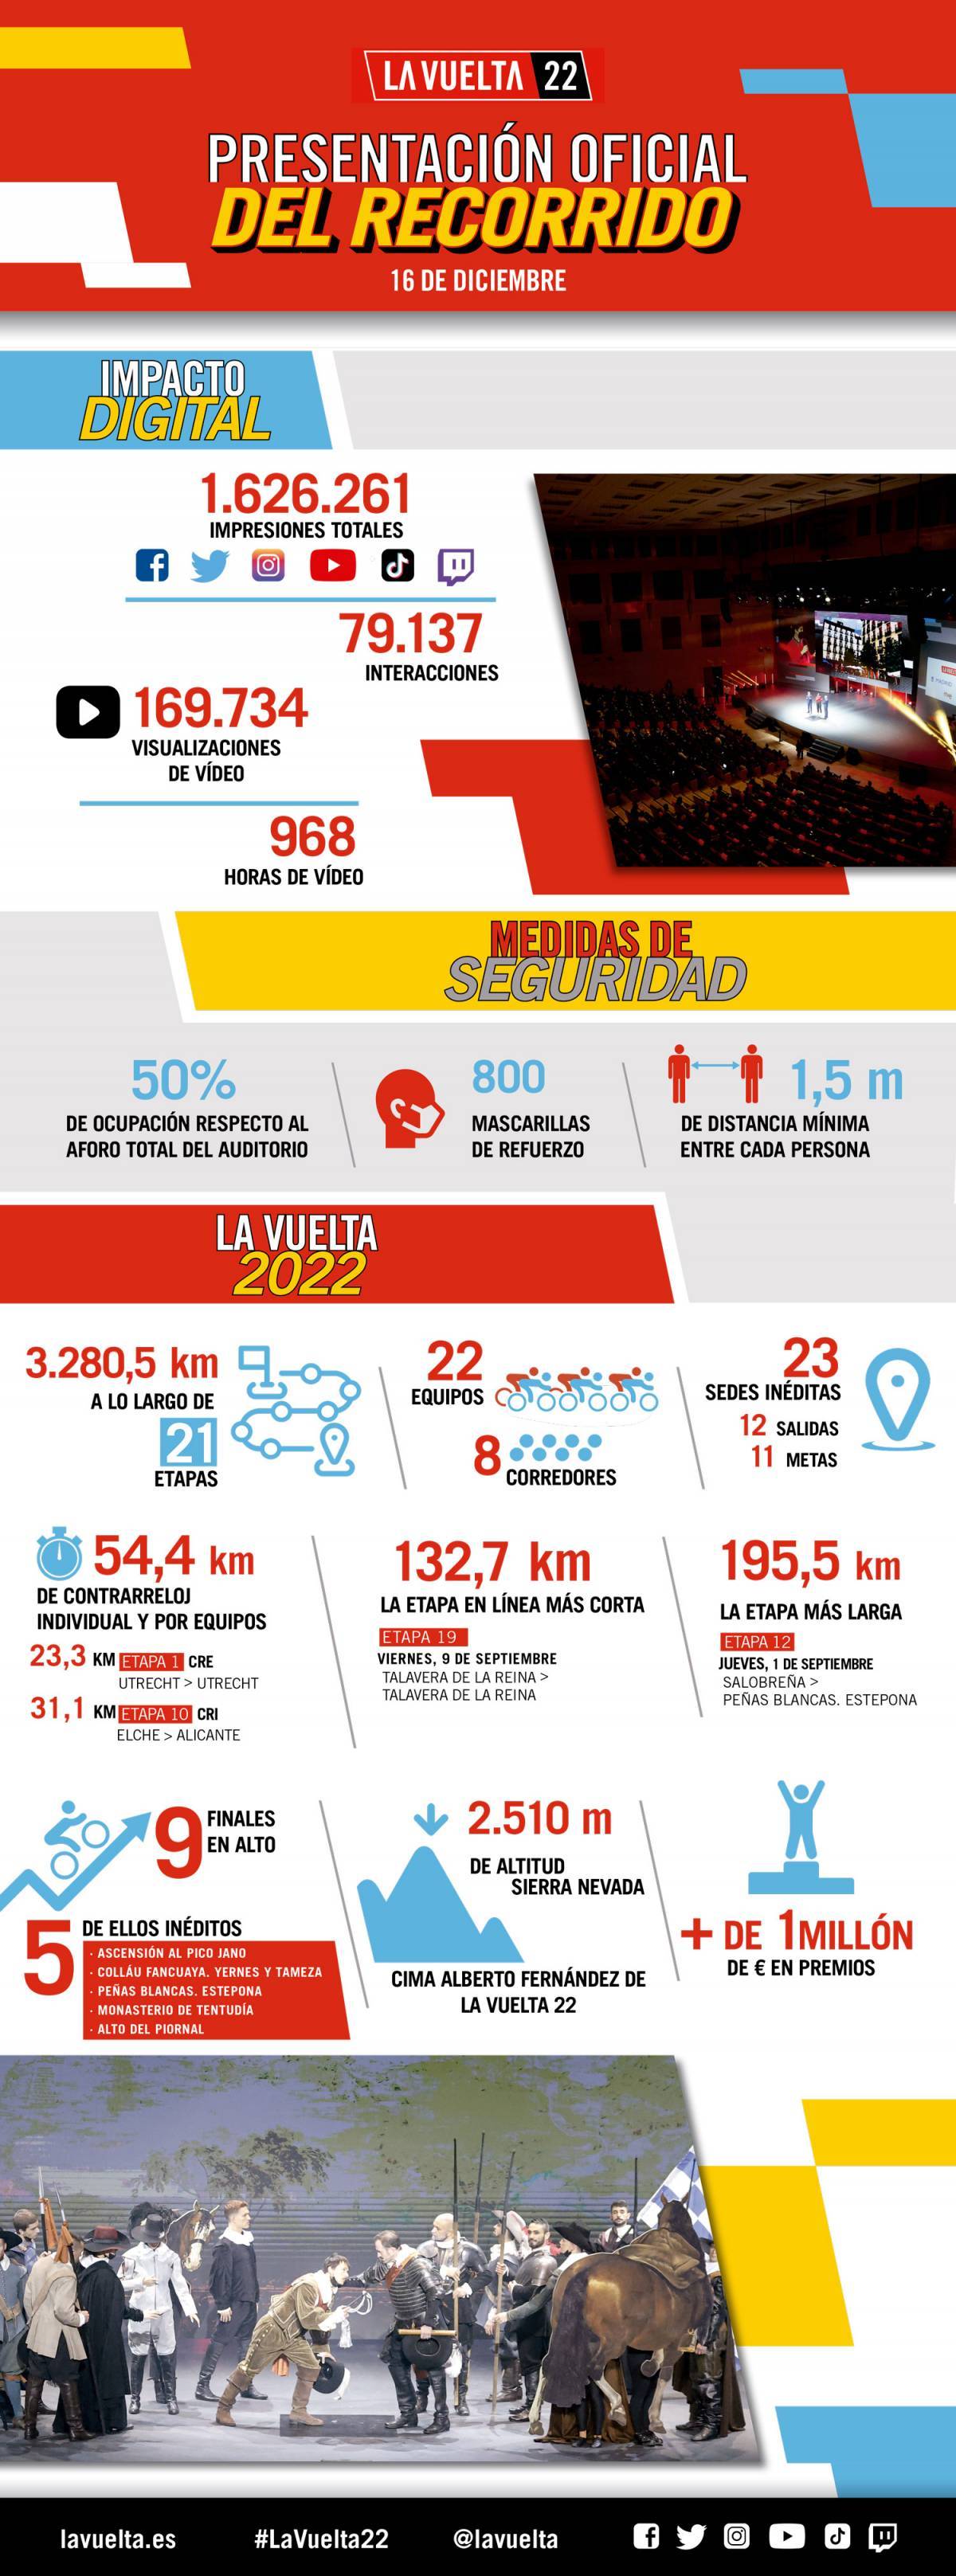 LaVuelta tendrá más de 3.000 kilómetros / LaVuelta 